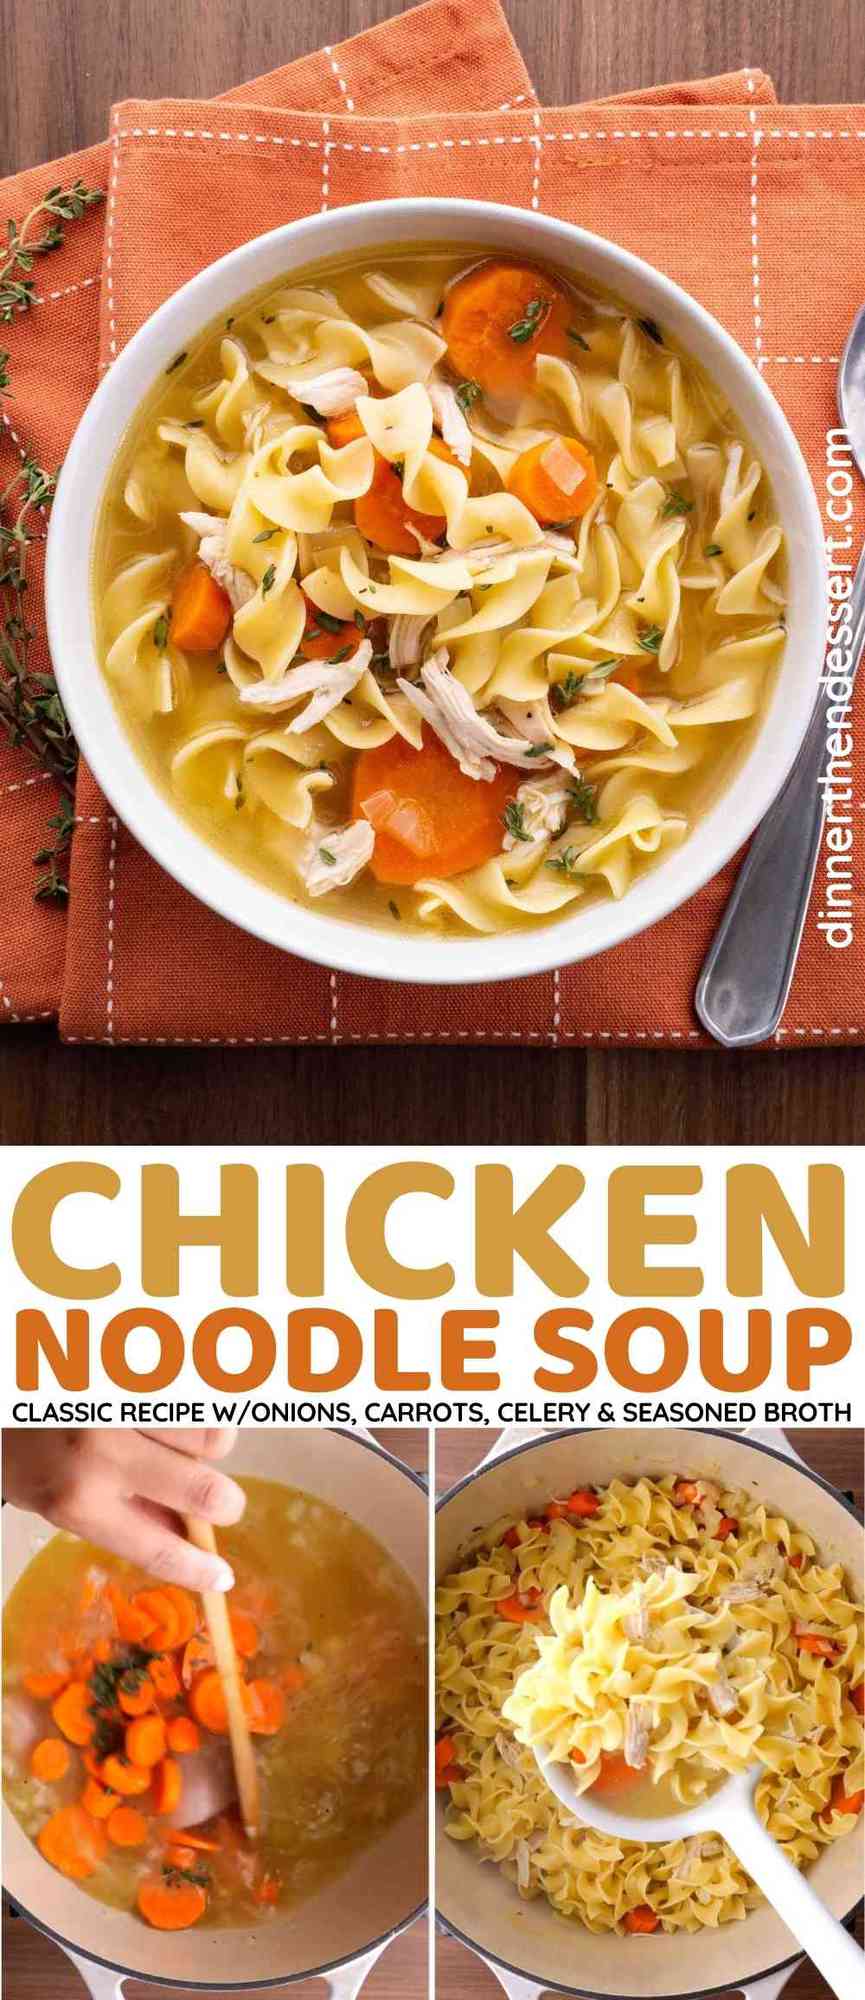 https://dinnerthendessert.com/wp-content/uploads/2018/12/Chicken-Noodle-Soup-L-1.jpg